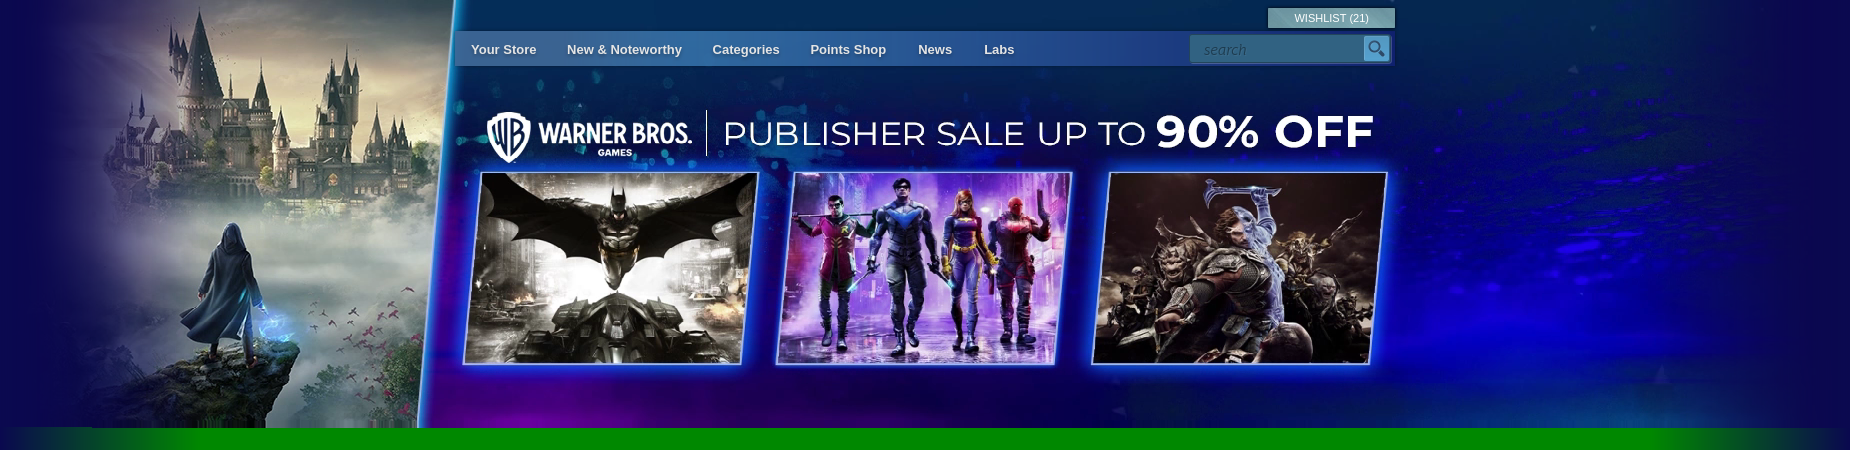 Warner Bros. Games banner at top of Steam homepage.